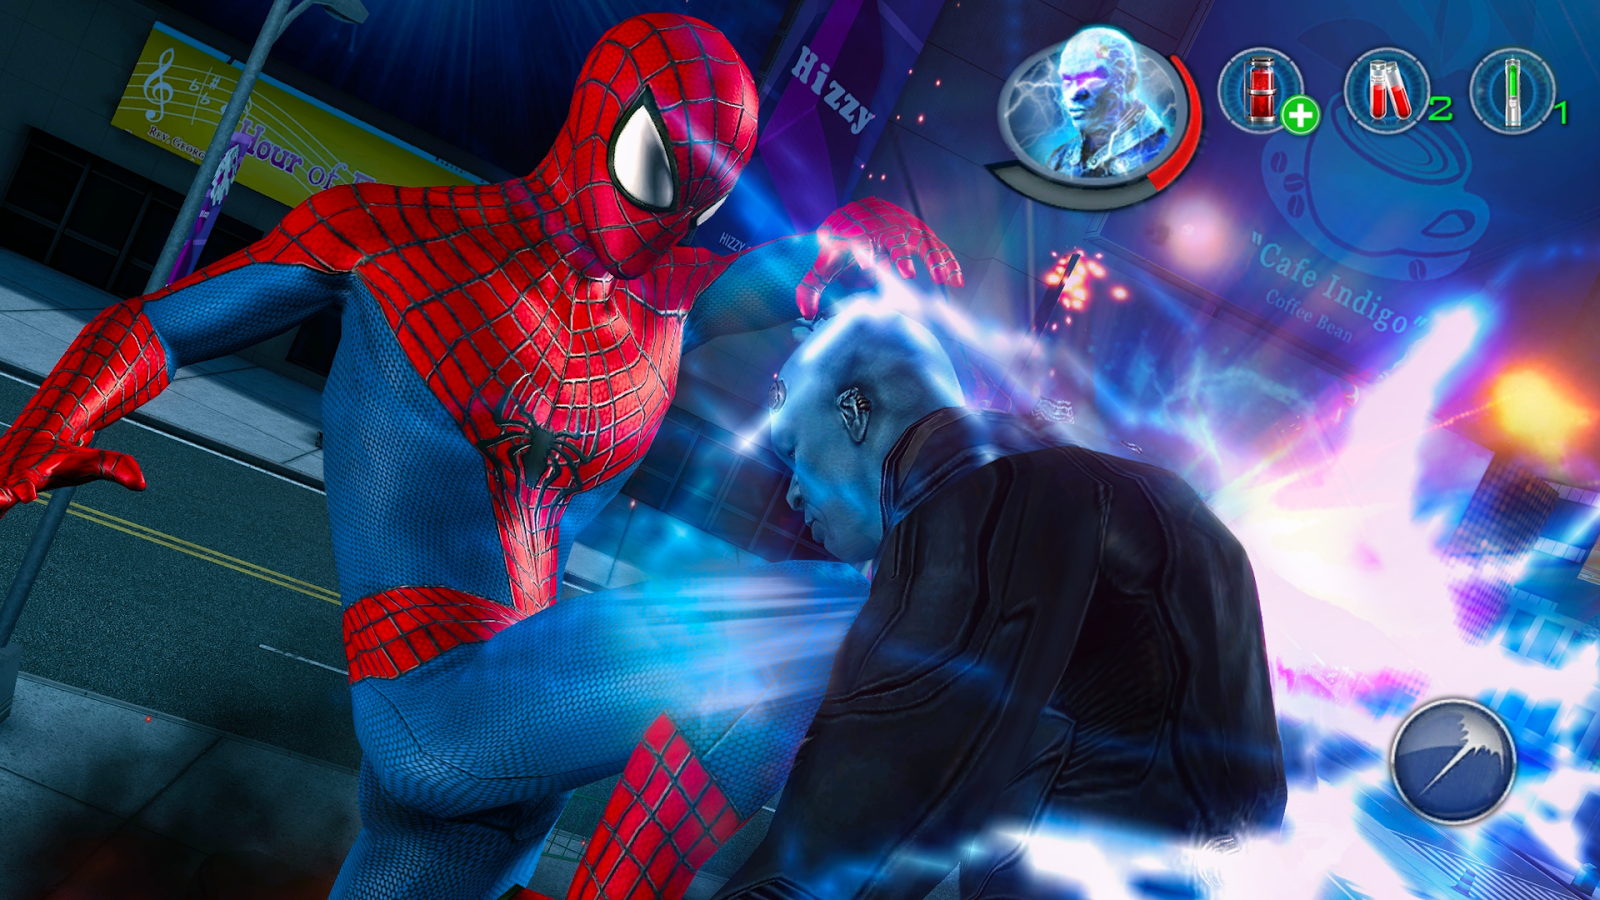  لعبه The Amazing Spider-Man 2 v1.2.0m مهكره جاهزه + اوفلاين WsCOnXOera_VRpPT9ensBDQFrywTnHmYOC8c0dA-0Xd3fuParw-FPu0llHL1sjMs8A=h900-rw